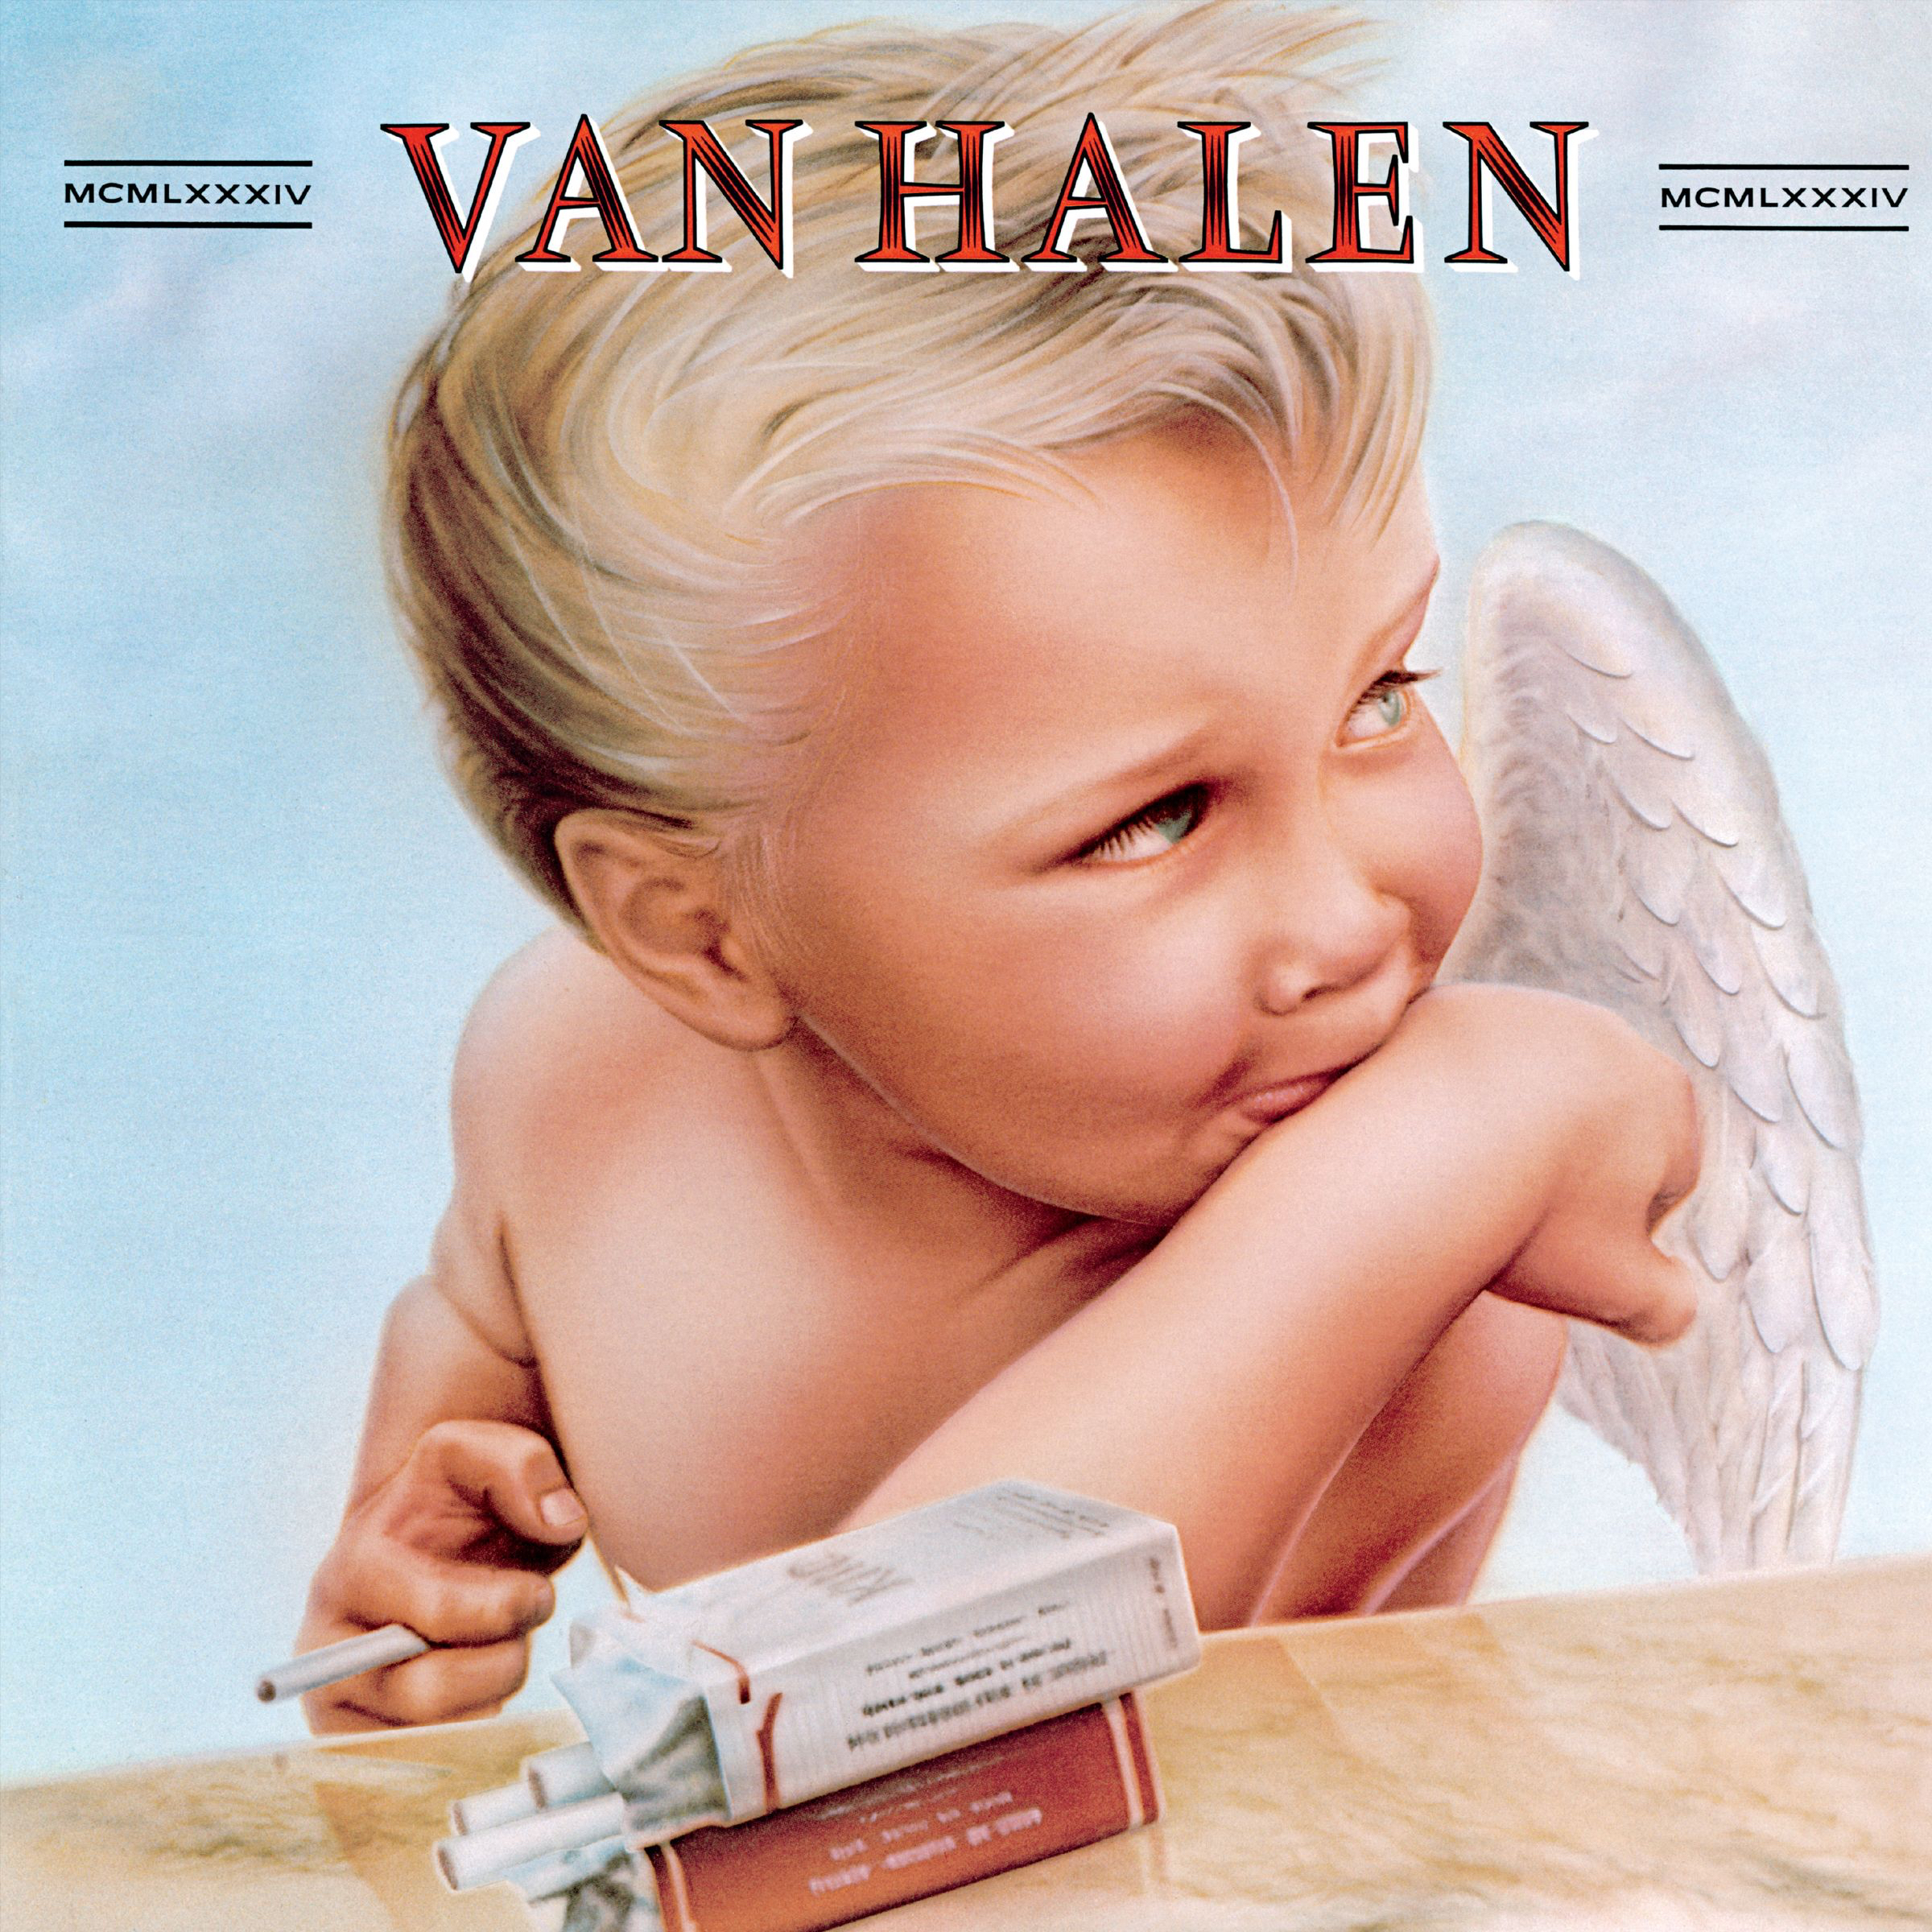 Van Halen (ヴァン・ヘイレン) 6thアルバム『1984』(1984年1月9日発売) 高画質CDジャケット画像 (ジャケ写)